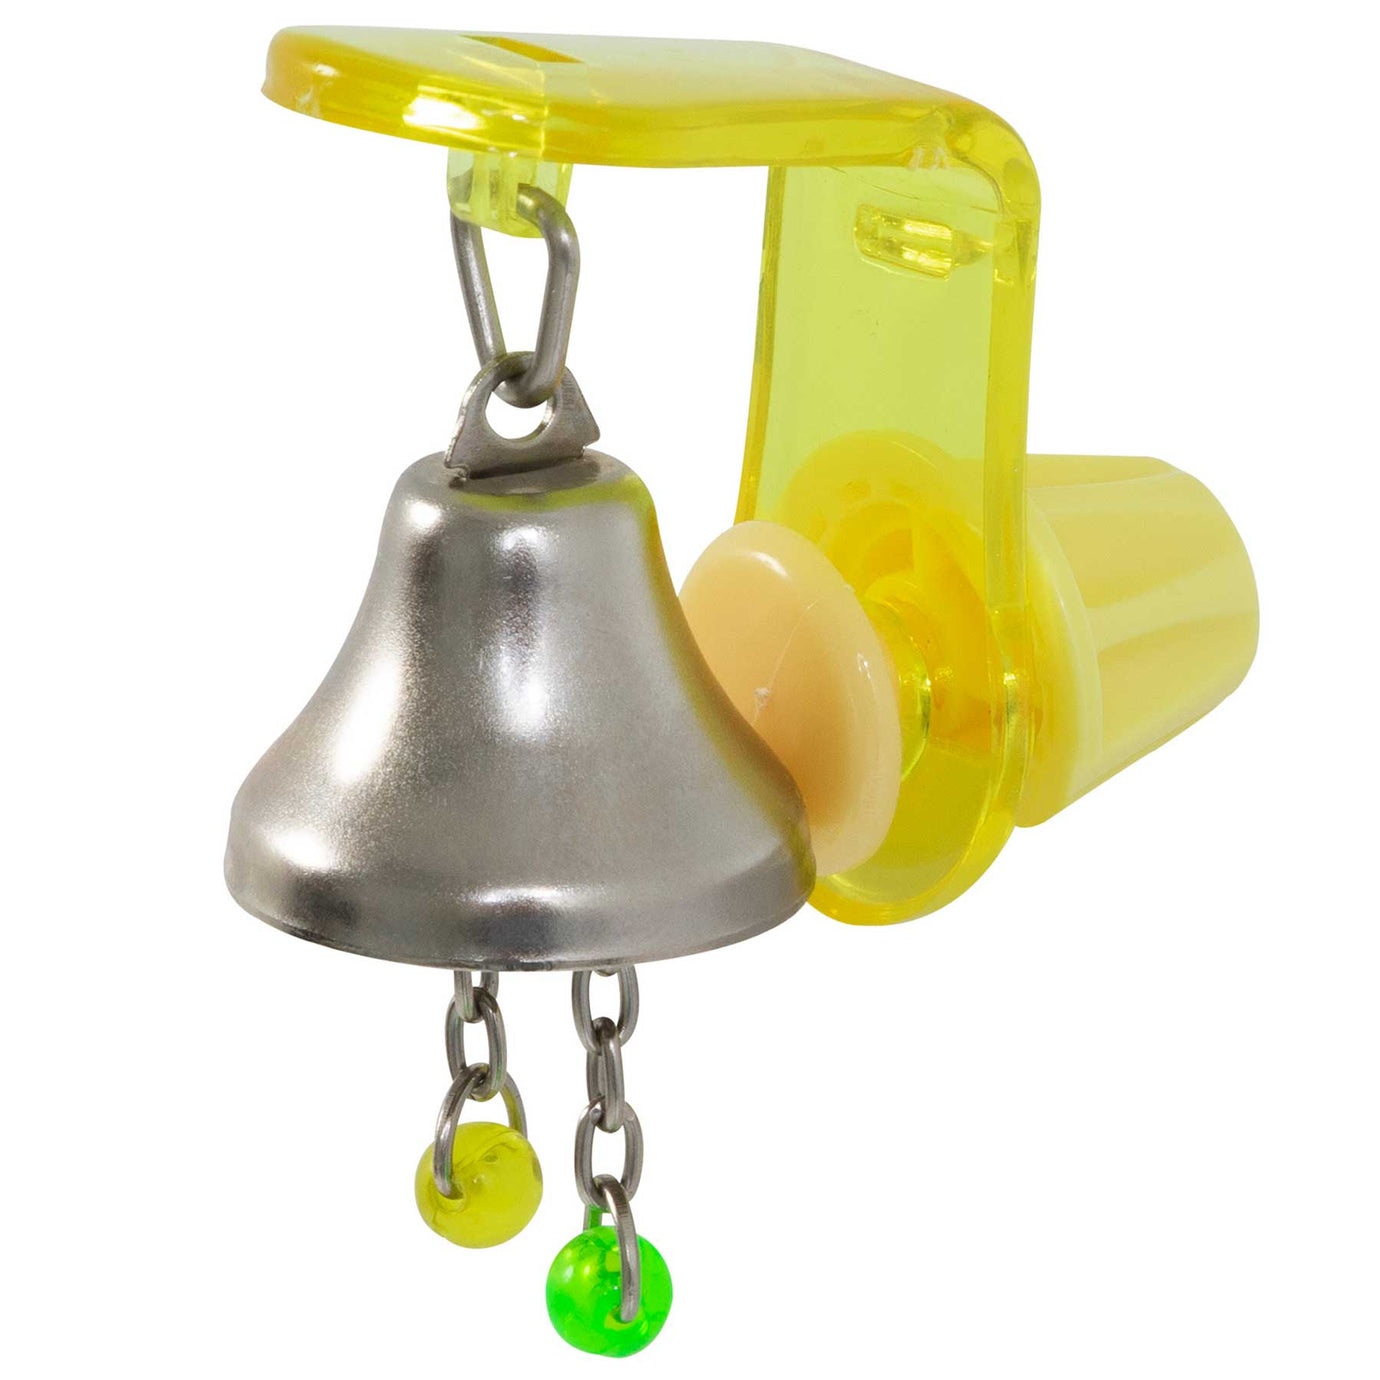 JW ActiviToys Small Bell Bird Toy. SKUS: 31073